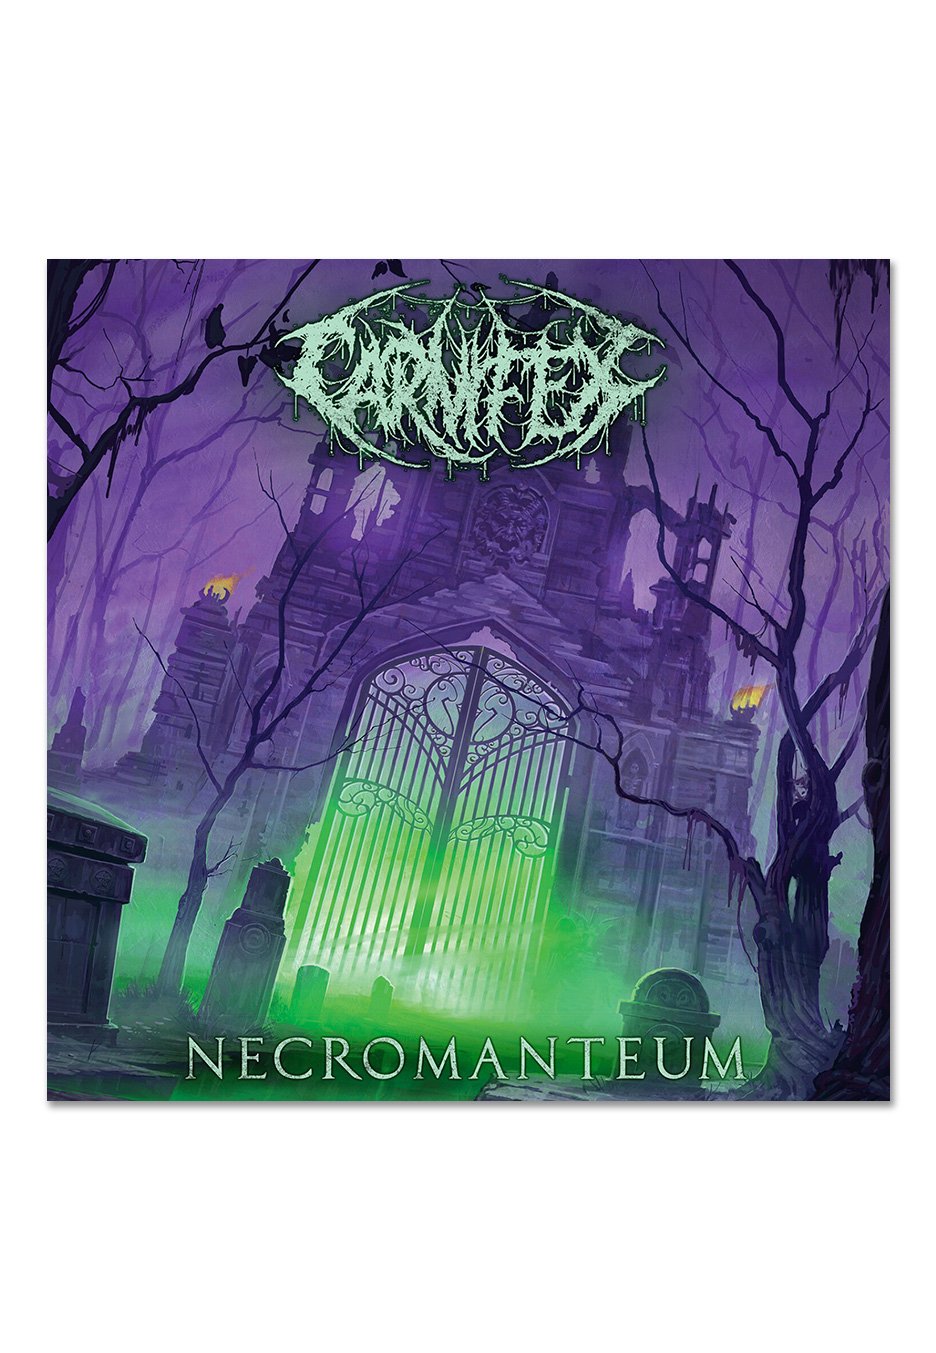 Carnifex - Necromanteum Ltd. Neon Green w/ Purple - Splattered Vinyl